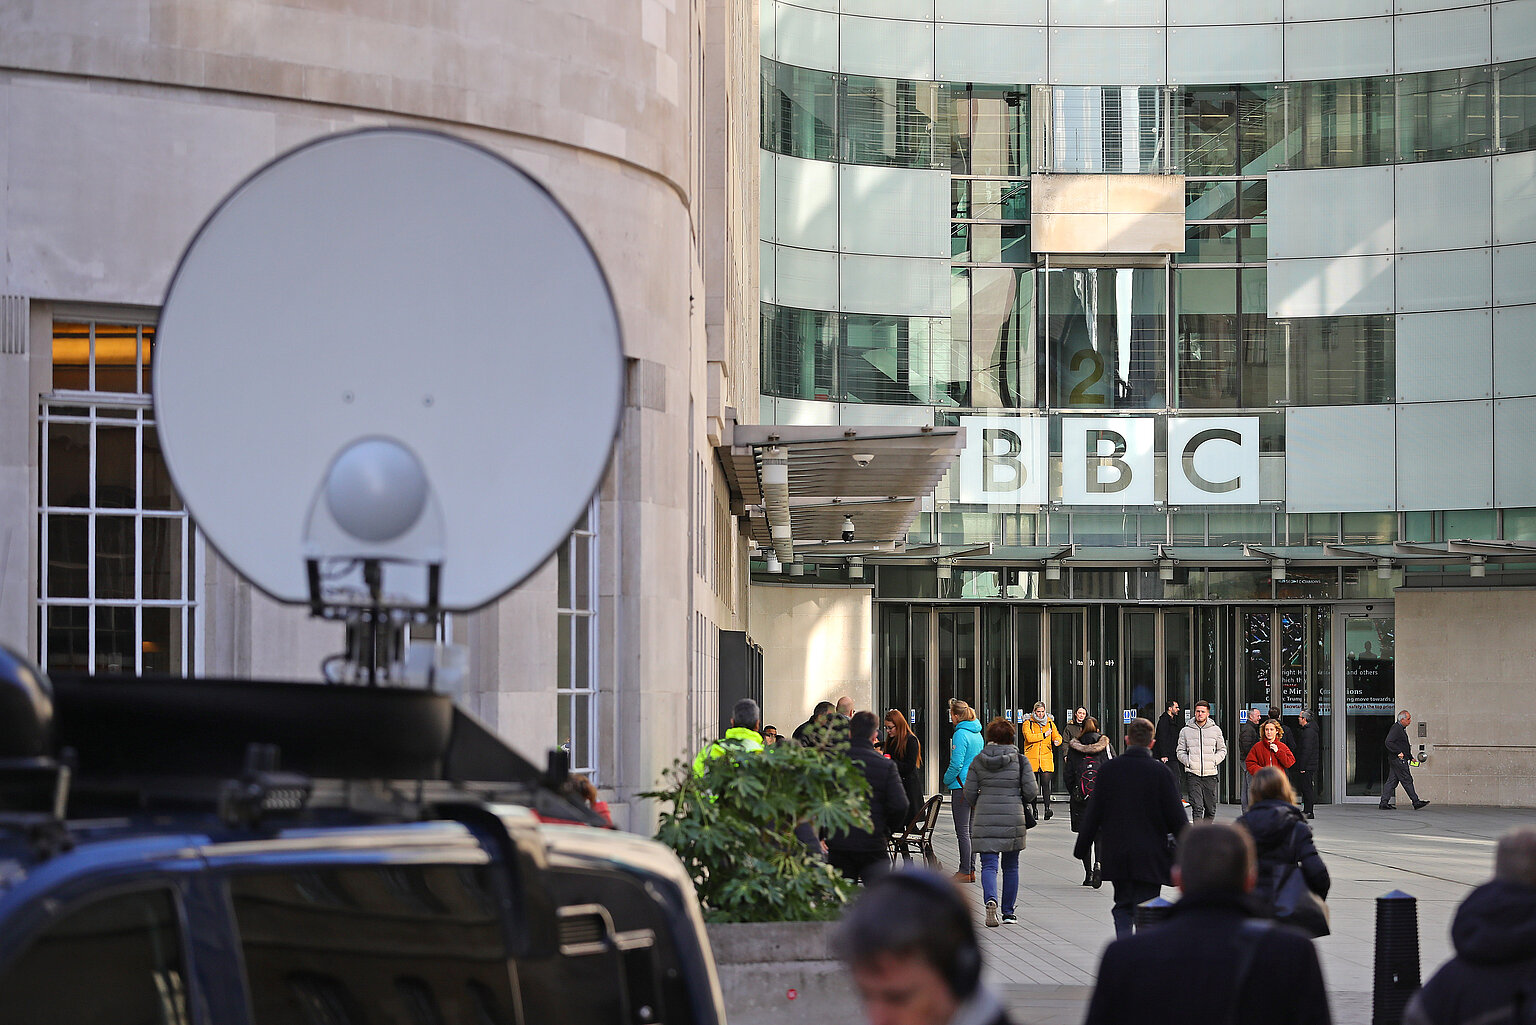  – Das Broadcastinghouse der BBC in London. Foto: Picture Alliance / empics